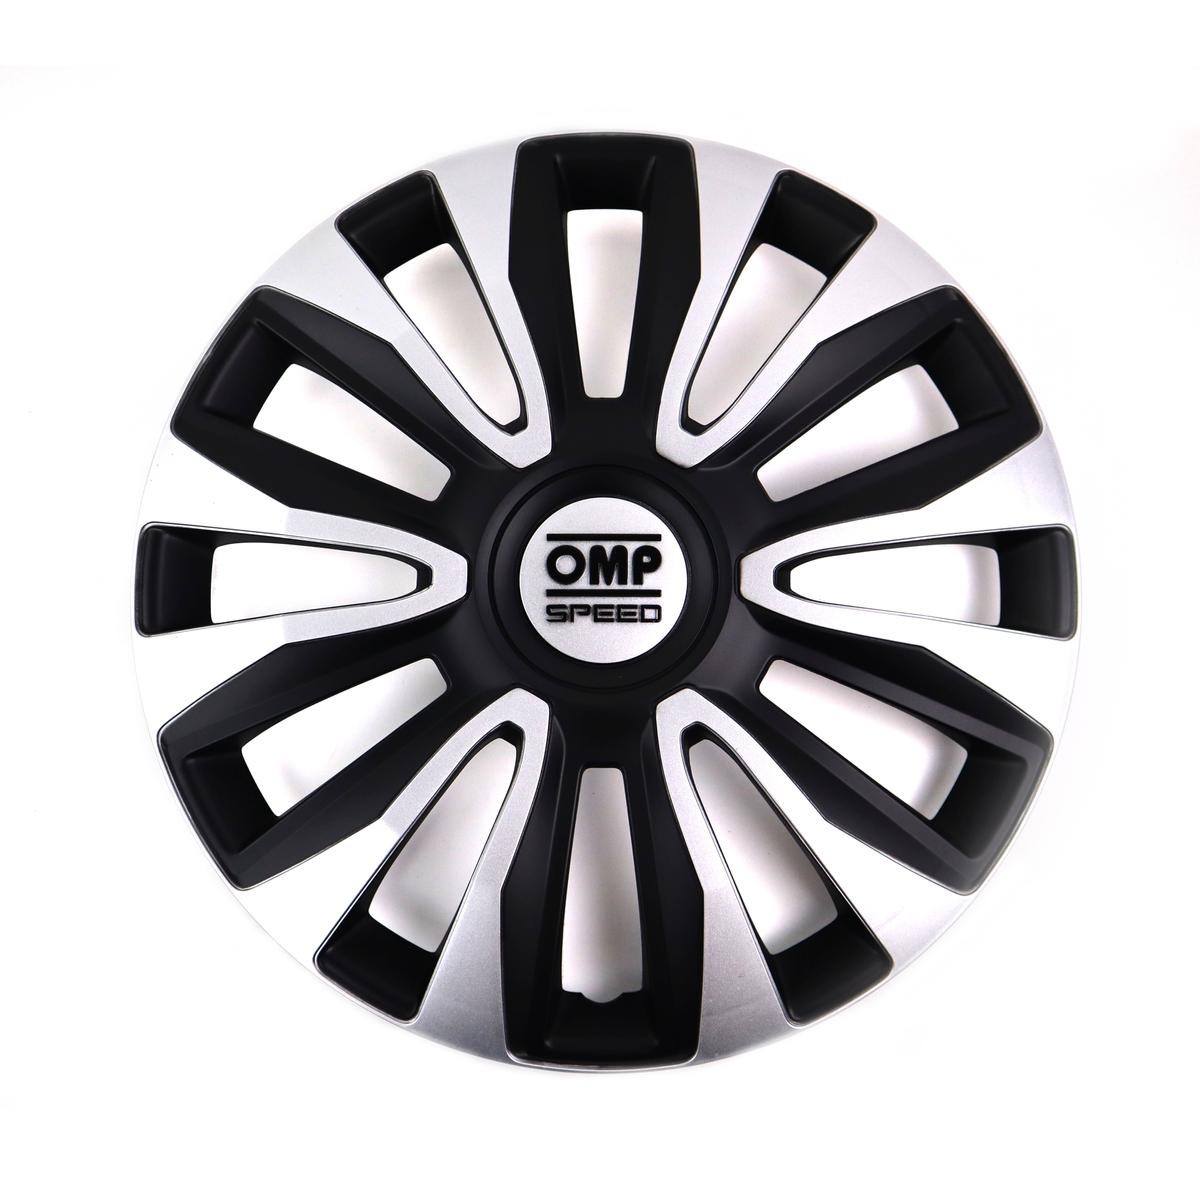 OMP OMPS07011412 Car wheel trims TOYOTA AVENSIS Estate (T25) 14 Inch black, silver